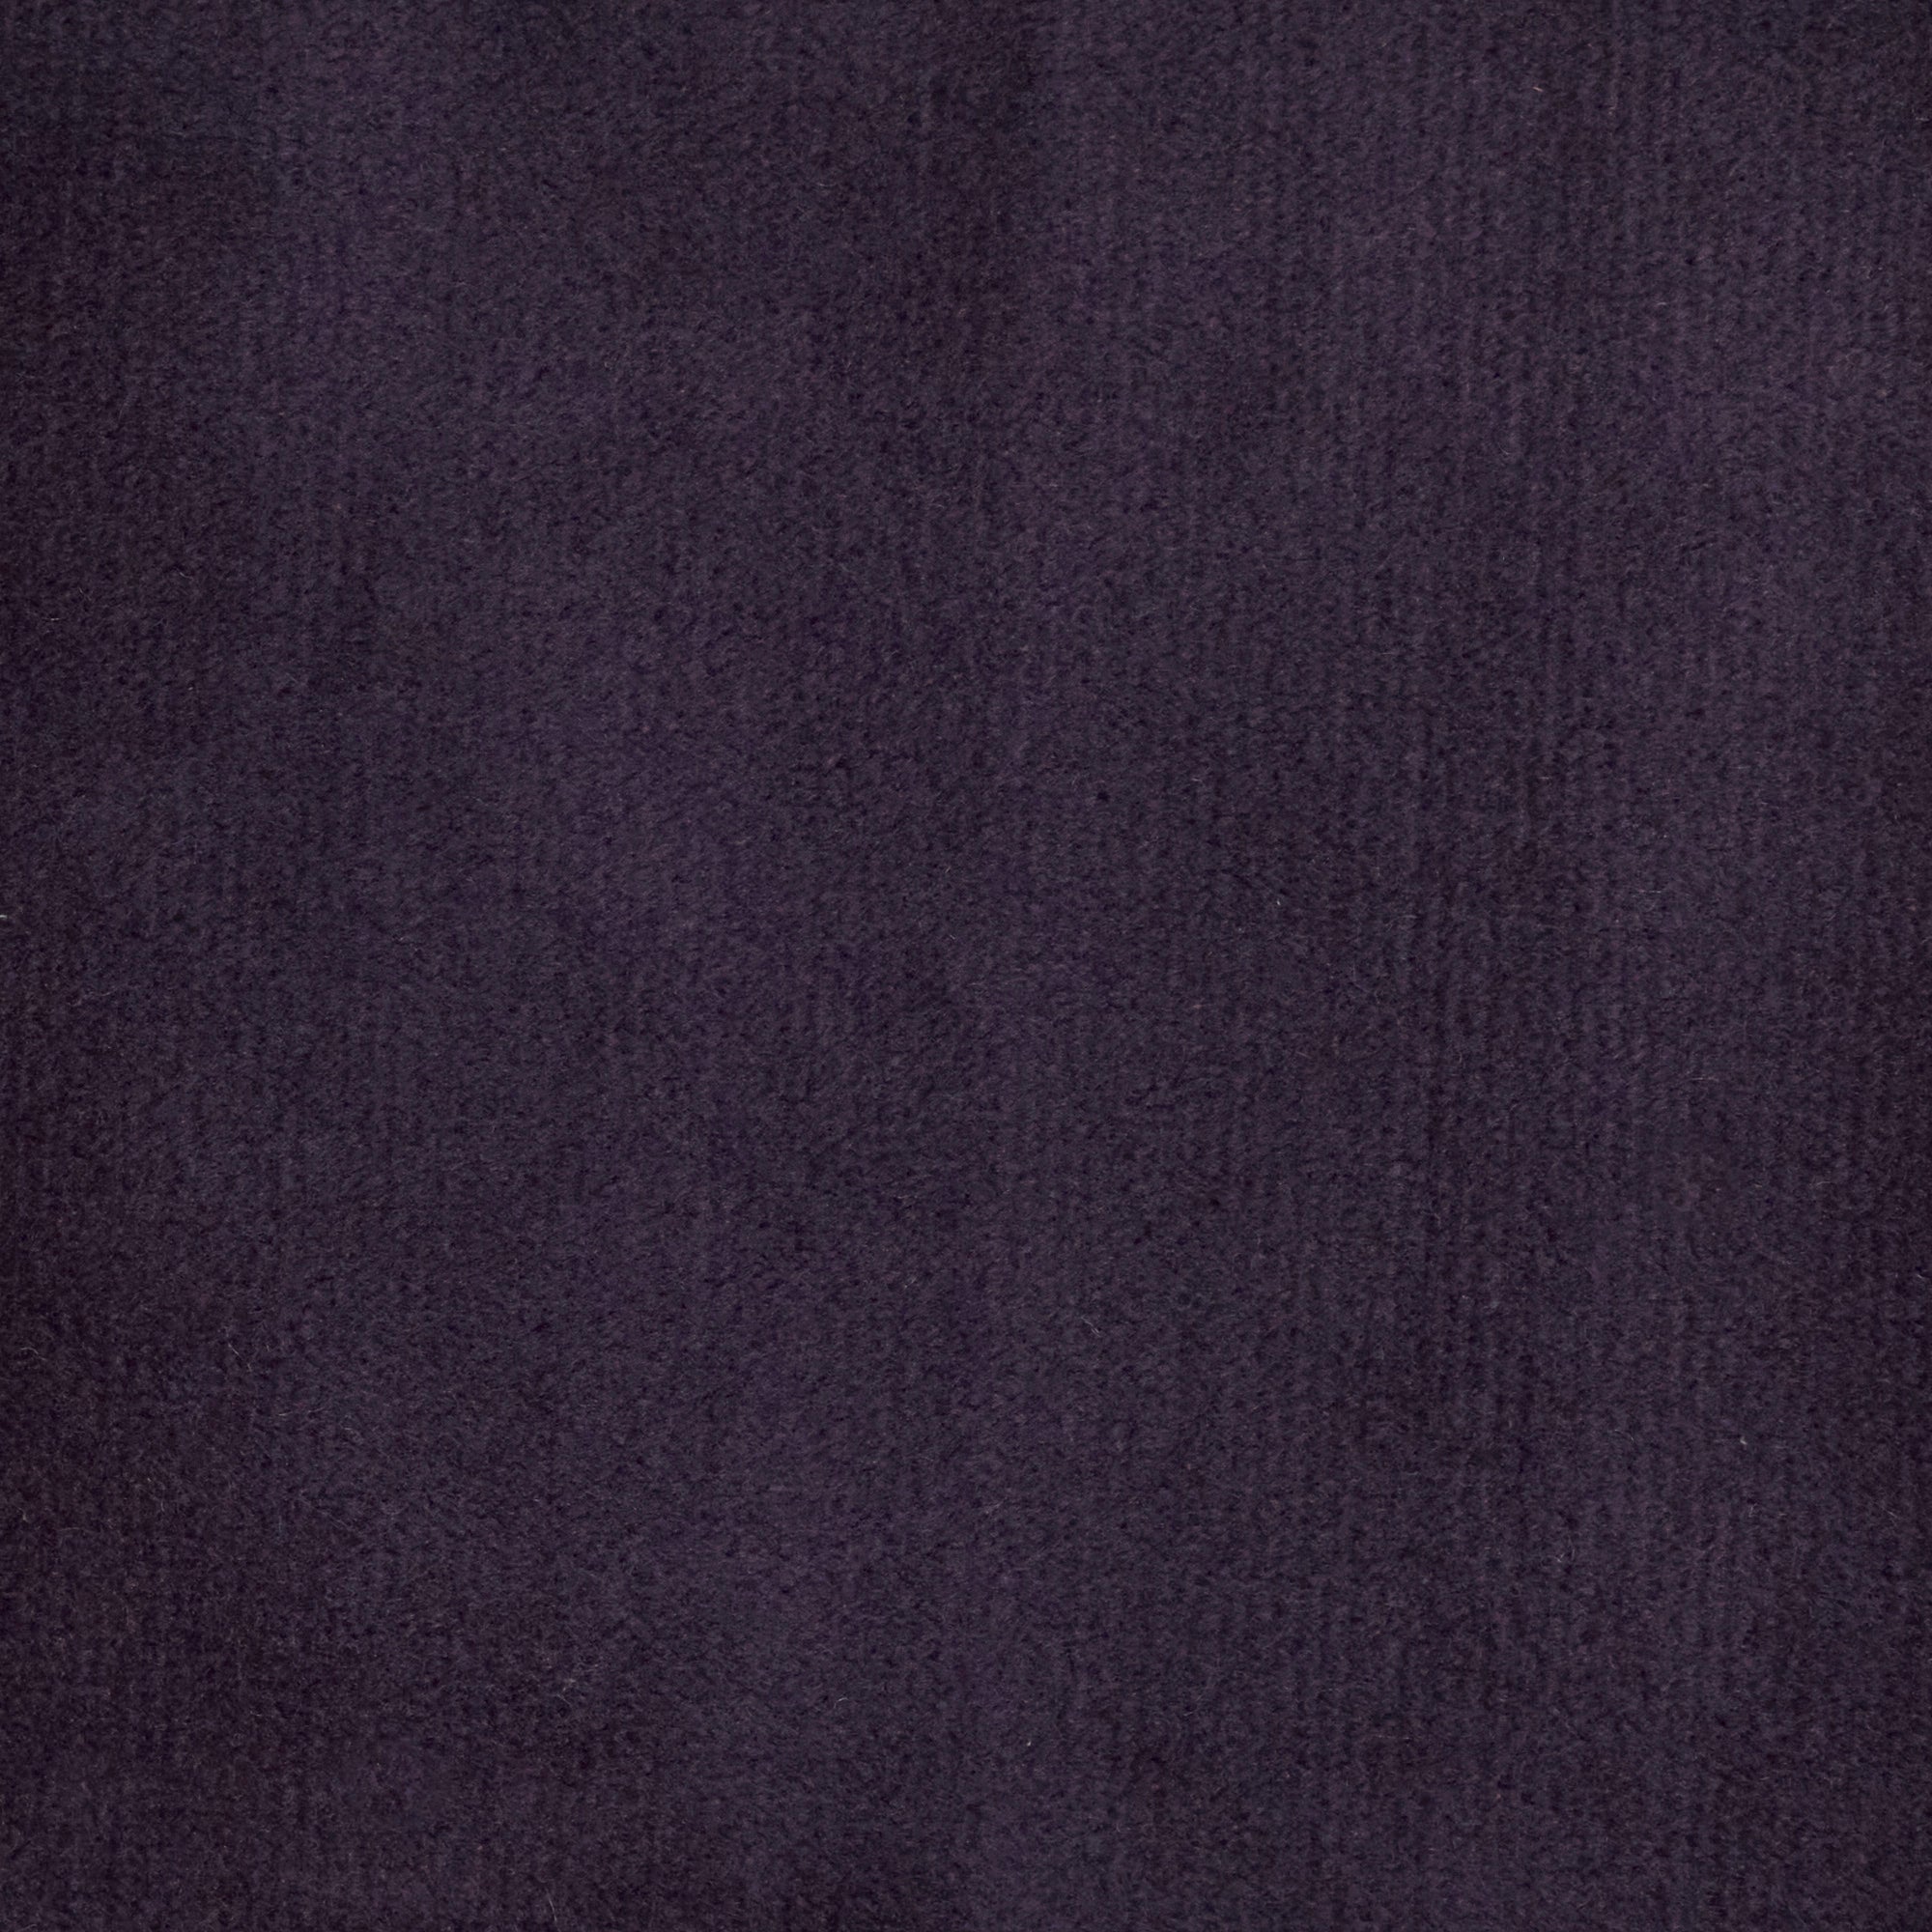 purple velvet fabric